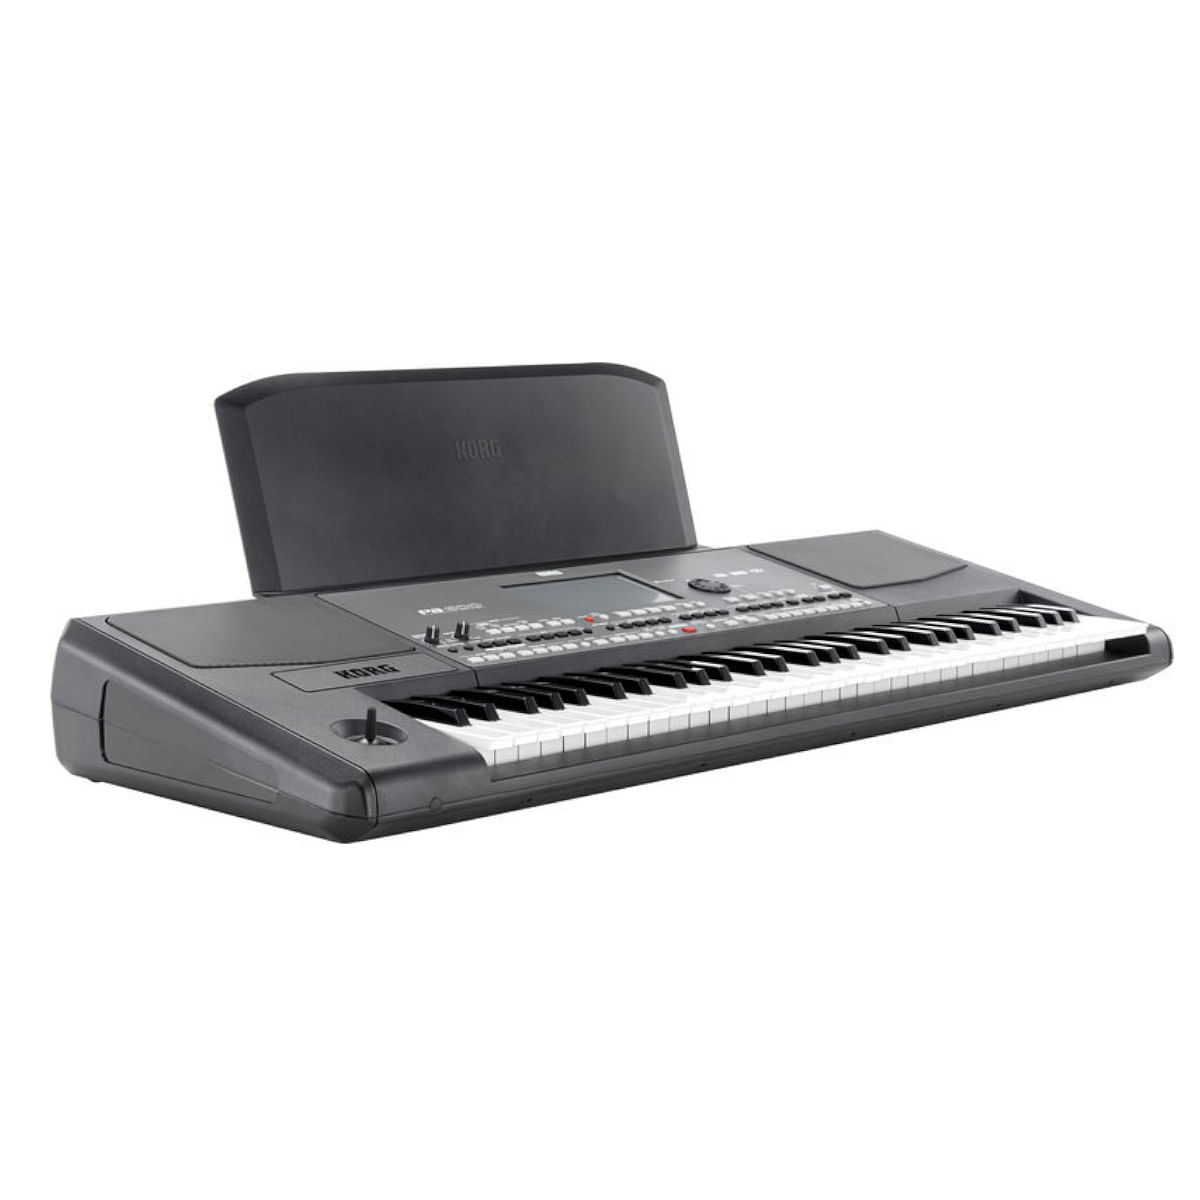 Buy Korg, Arranger Keyboard Pa-600 Online